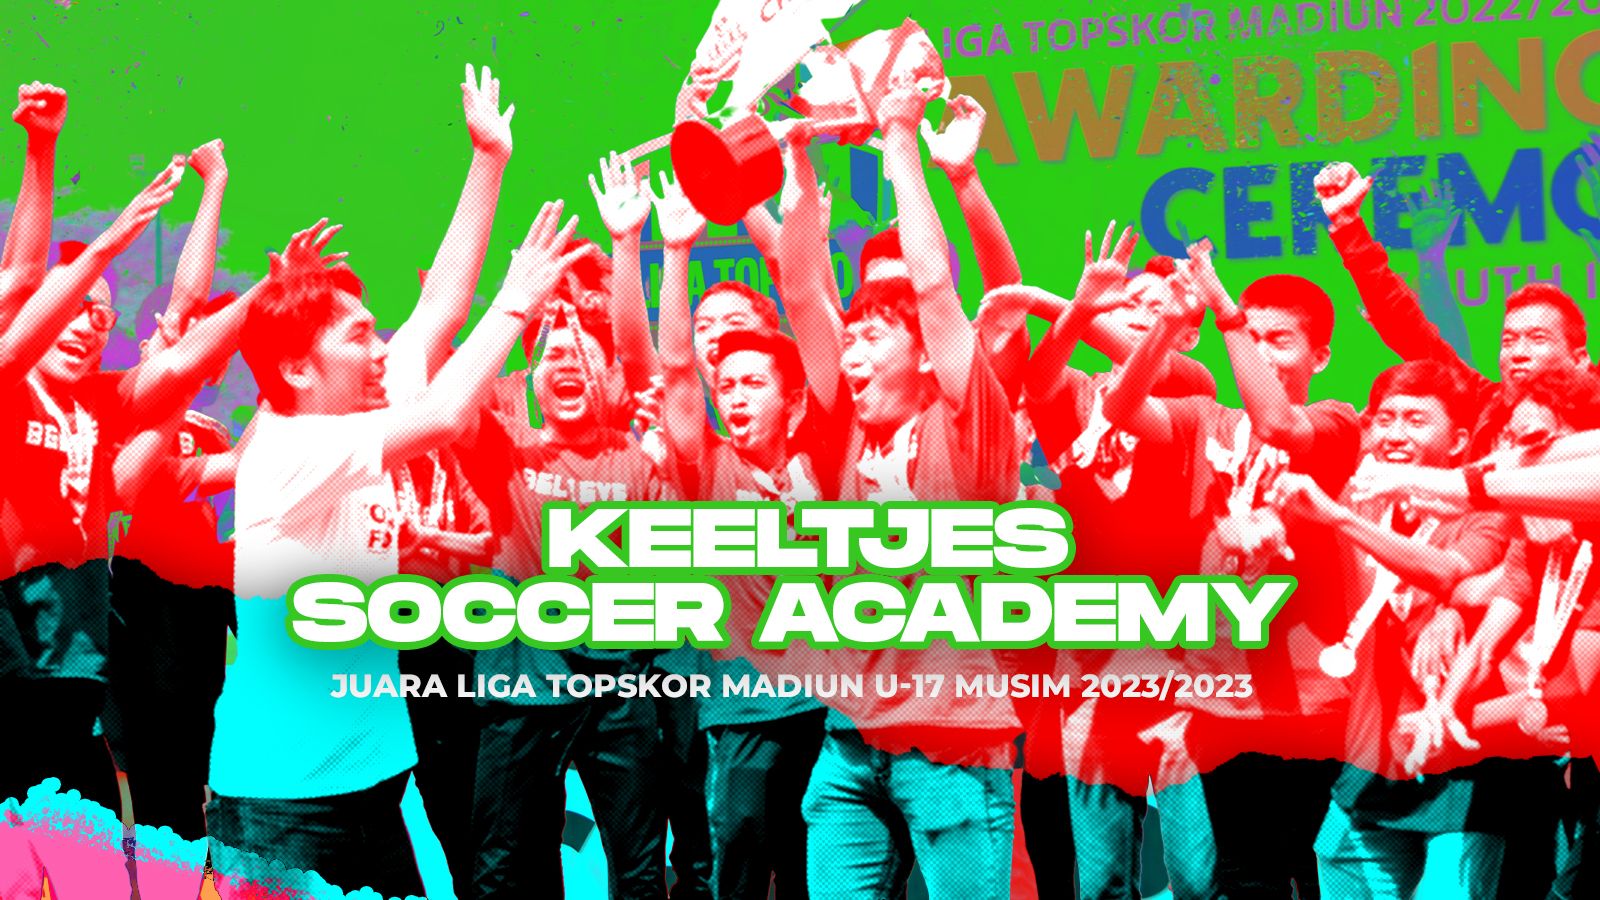 Keeltjes Soccer Academy berhasil juara di Liga TopSkor Madiun U-17 2022-2023. (Wiryanto/Skor.id)